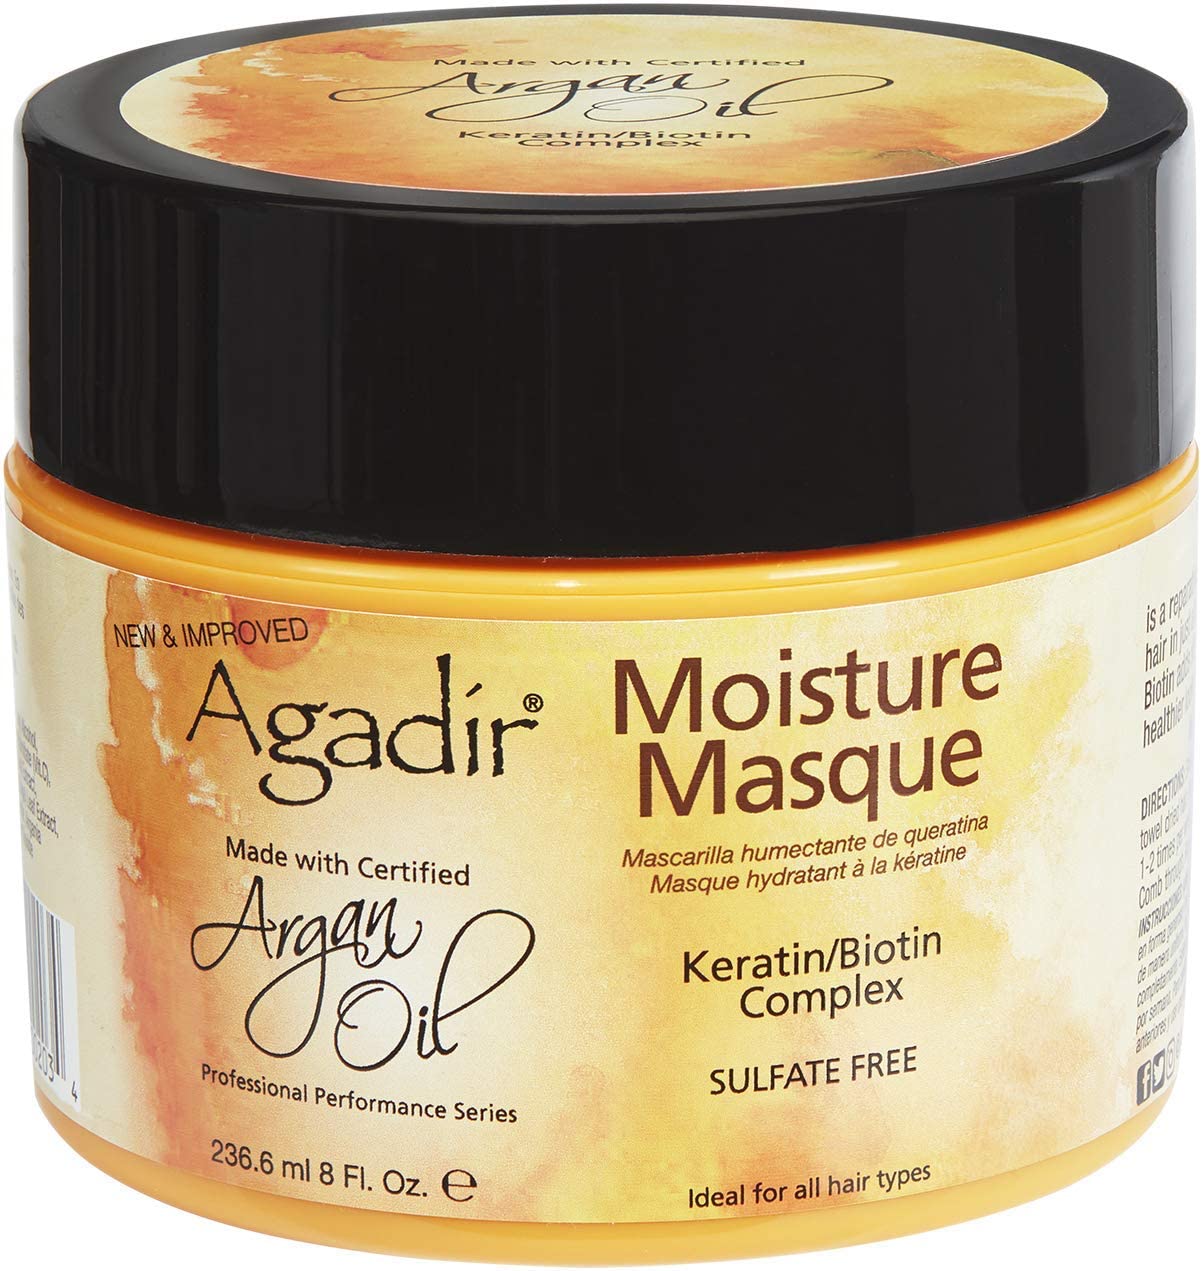 Argan Oil Moisture Masque 236.6 Ml